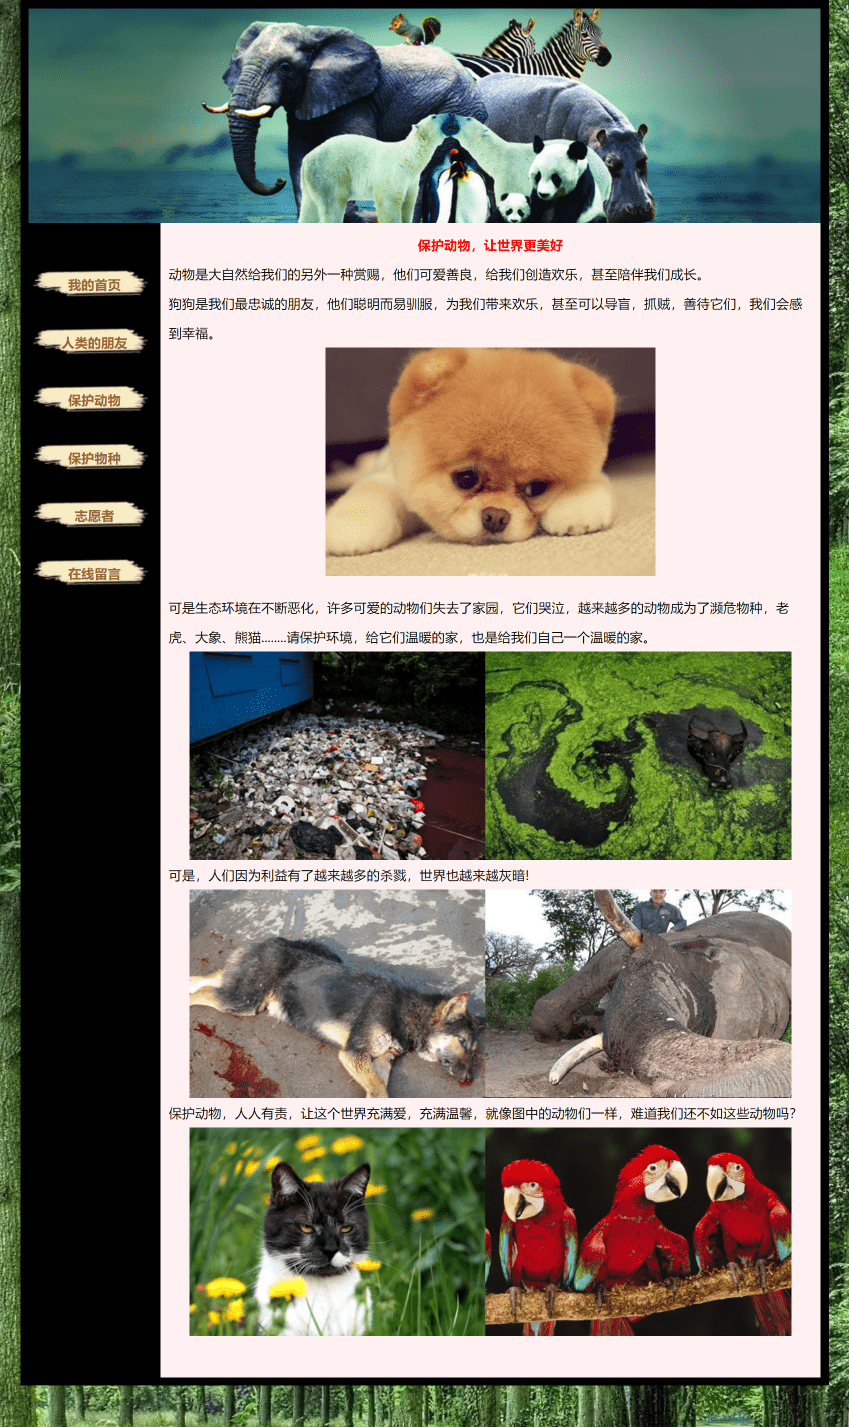 HTML网页设计：爱护动物题材——保护动物大象(6页) HTML网页设计结课作业 web课程设计网页规划与设计 网页设计成品DW静态网页_css